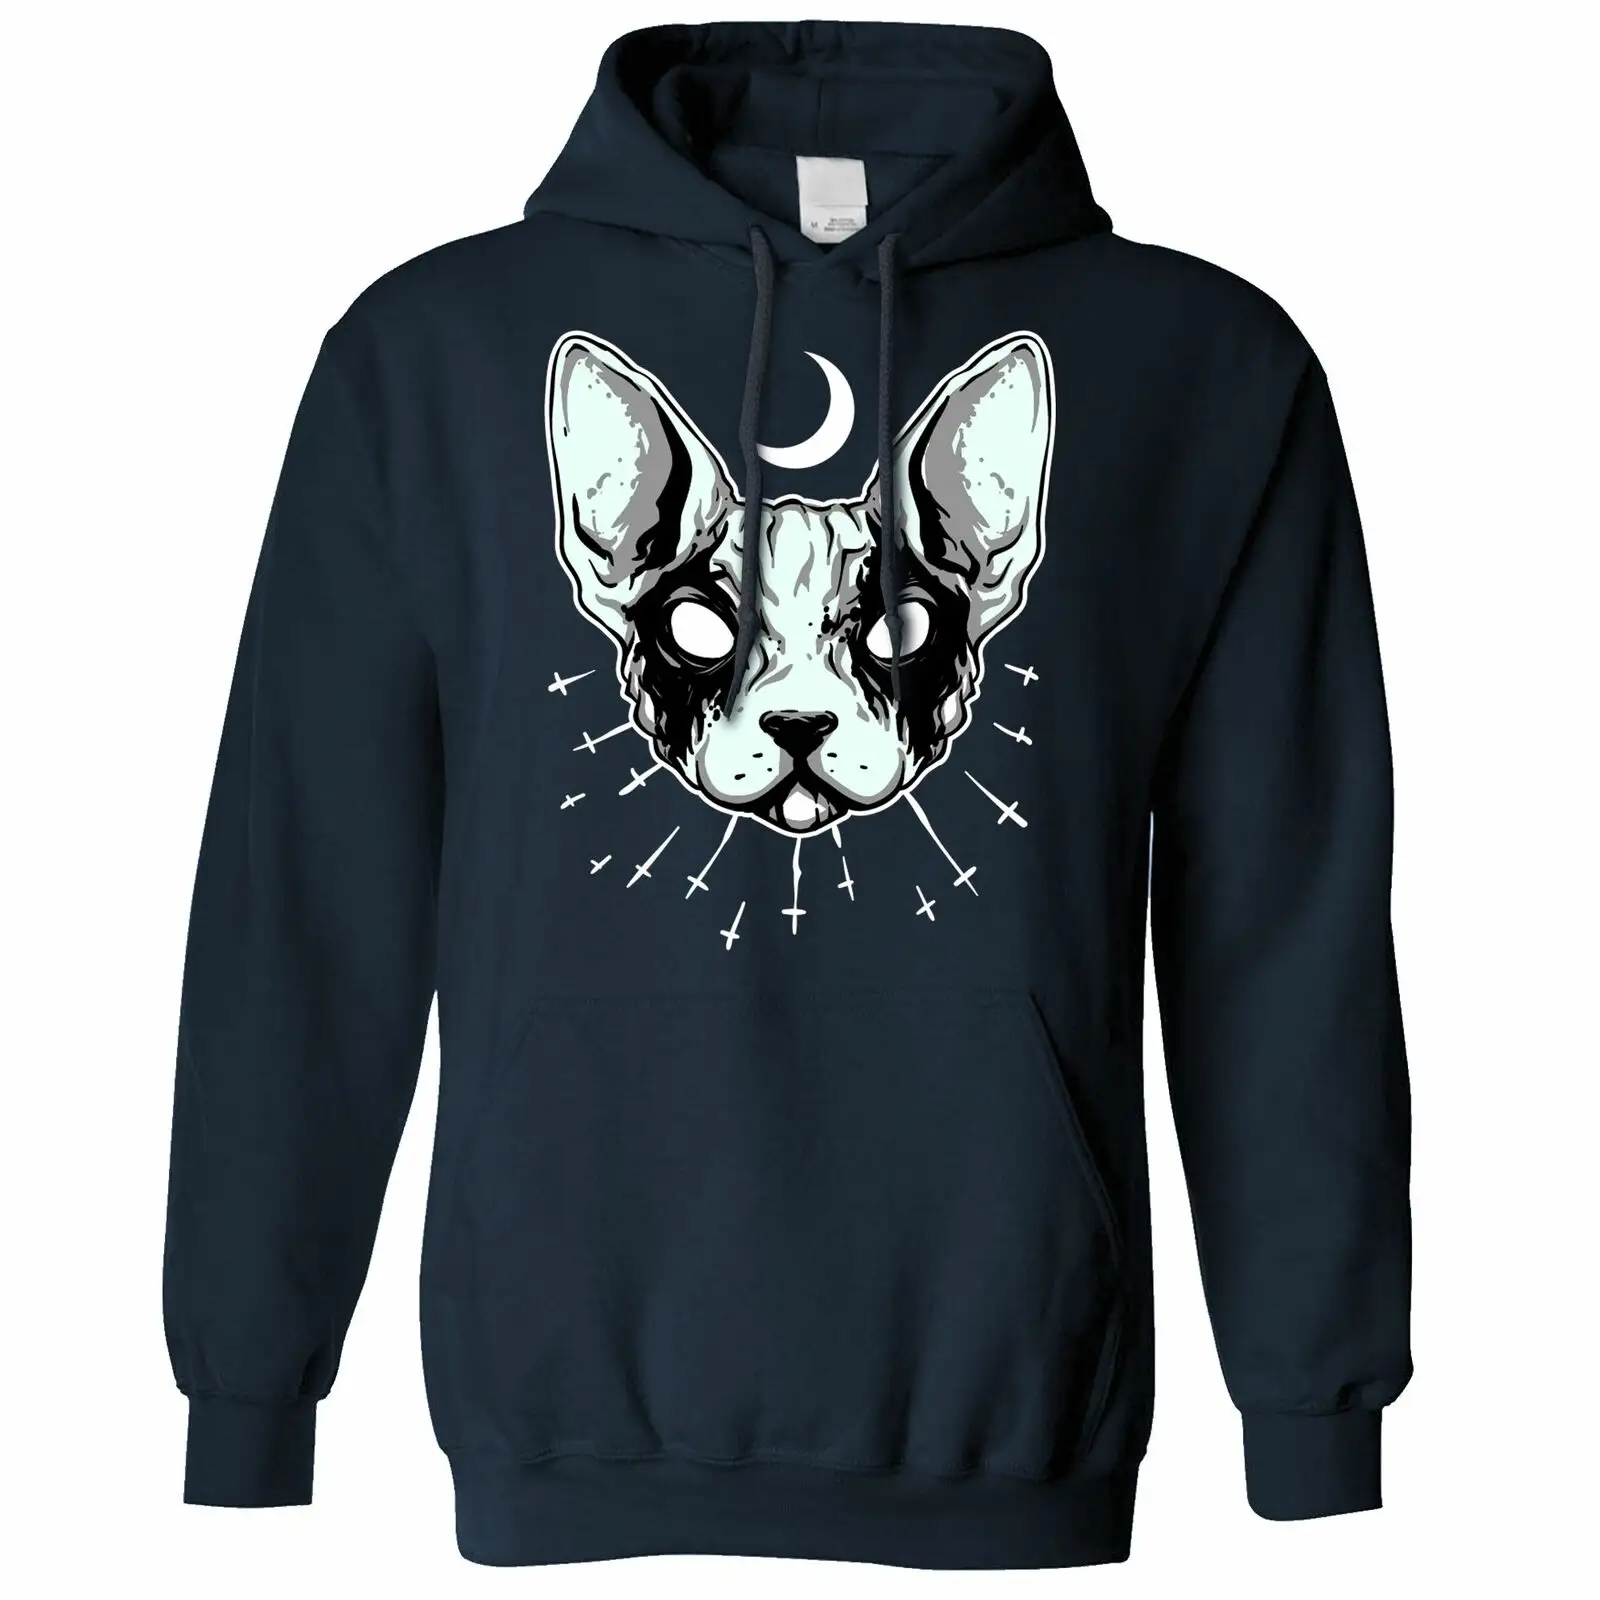 Siyah Hoodie gotik kedi ay ruhu baskı svetşört erkek kış giysileri hoodies ve tişörtü